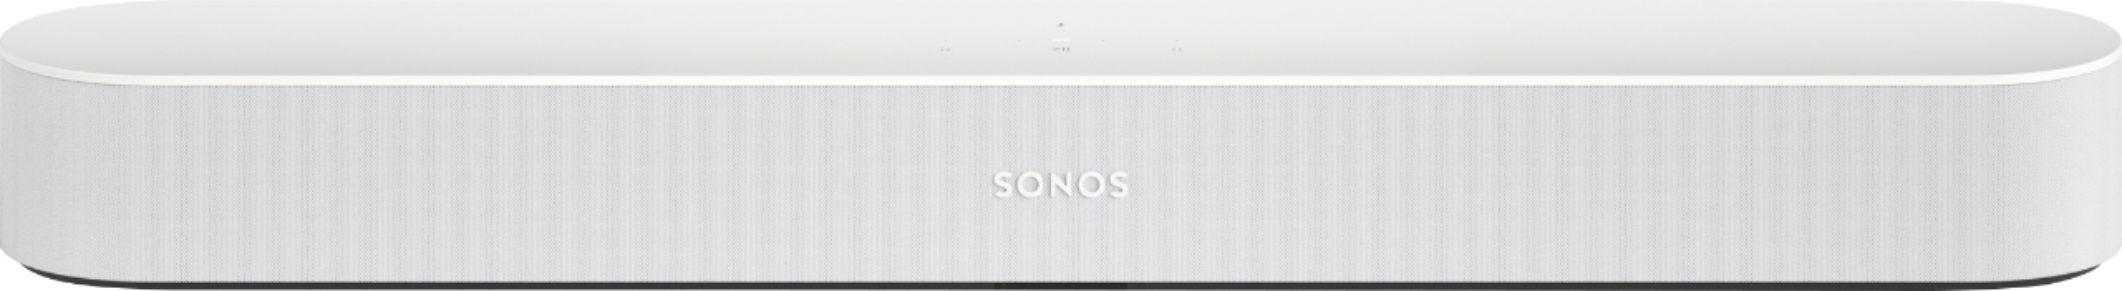 Sonos BEAM1US1 Beam Soundbar with Voice Control